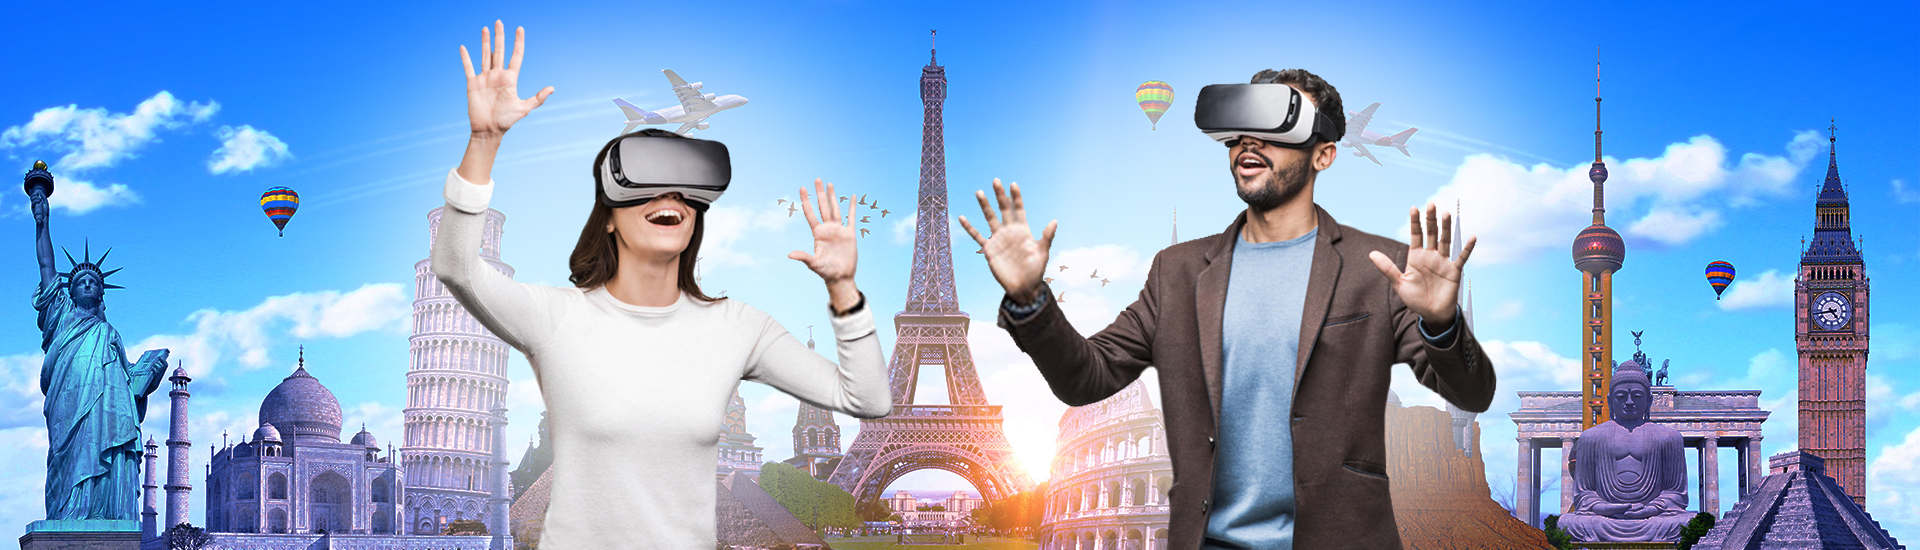 virtual reality tourism companies